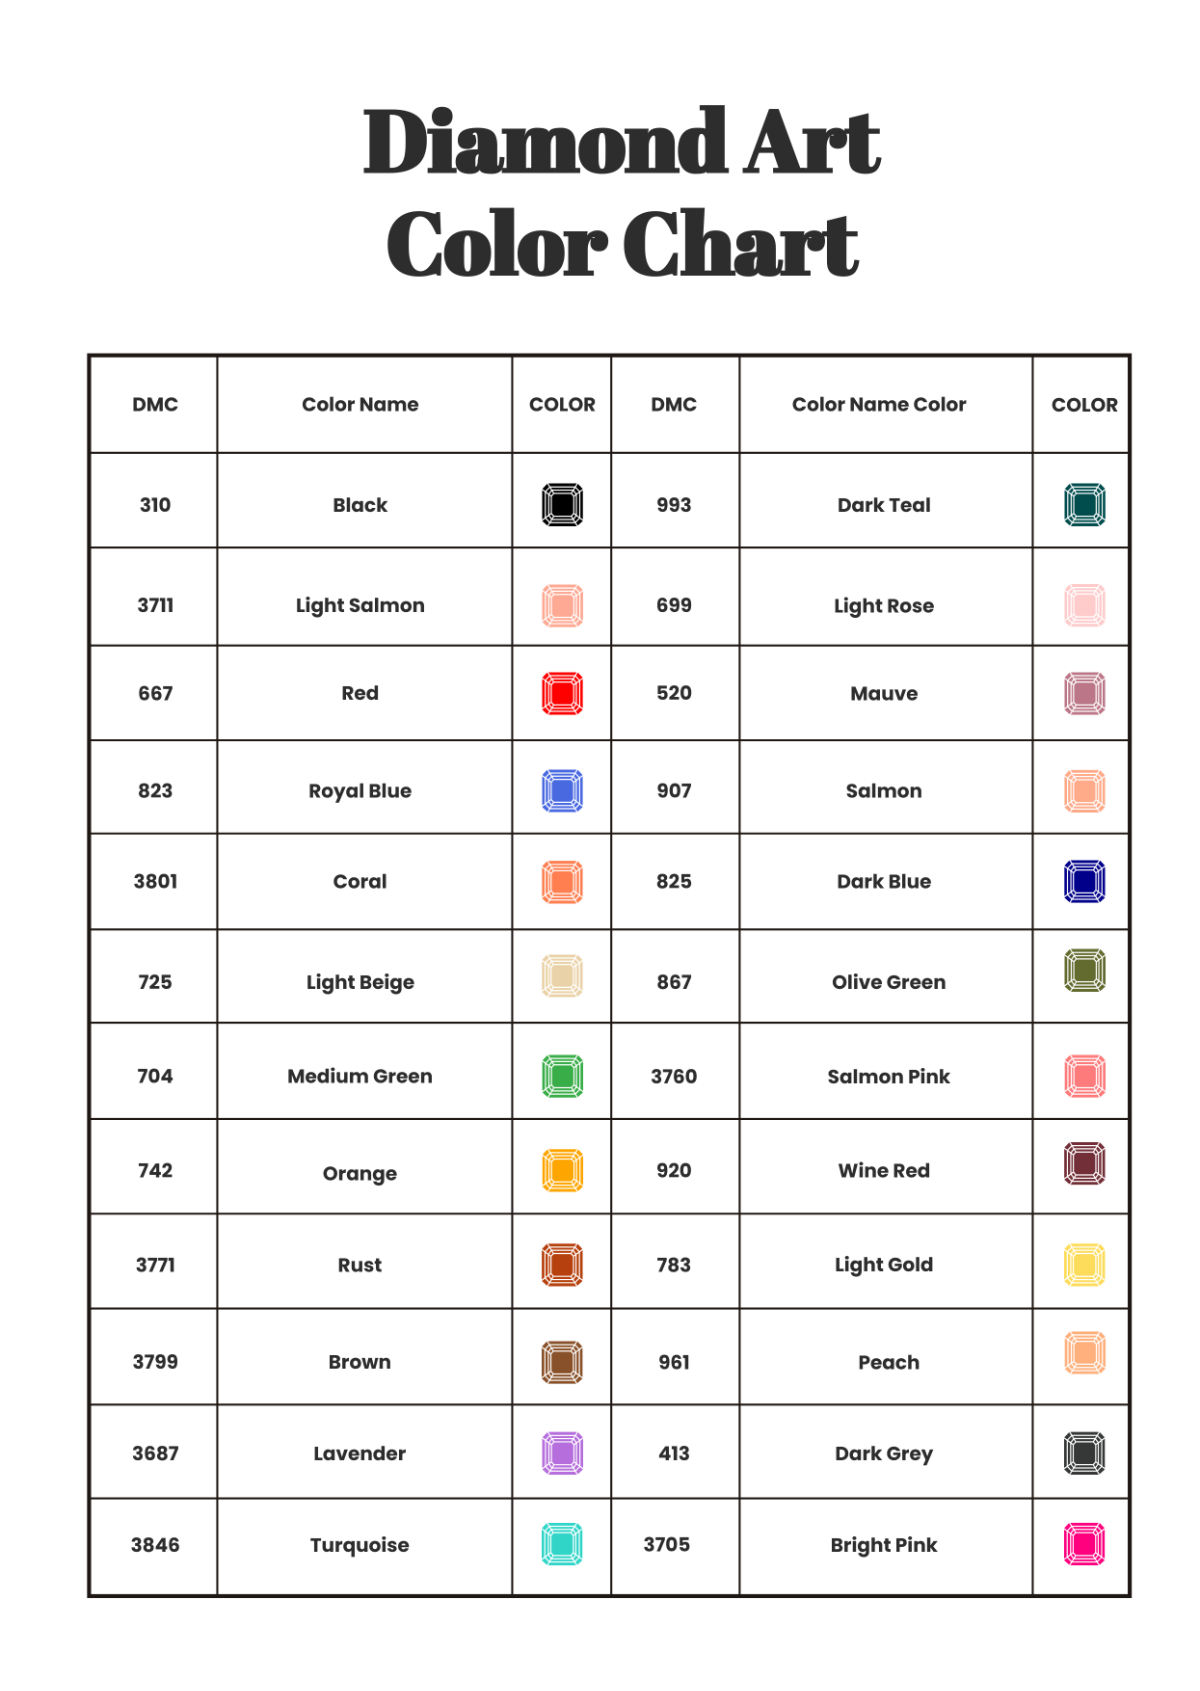 Diamond Art Color Chart